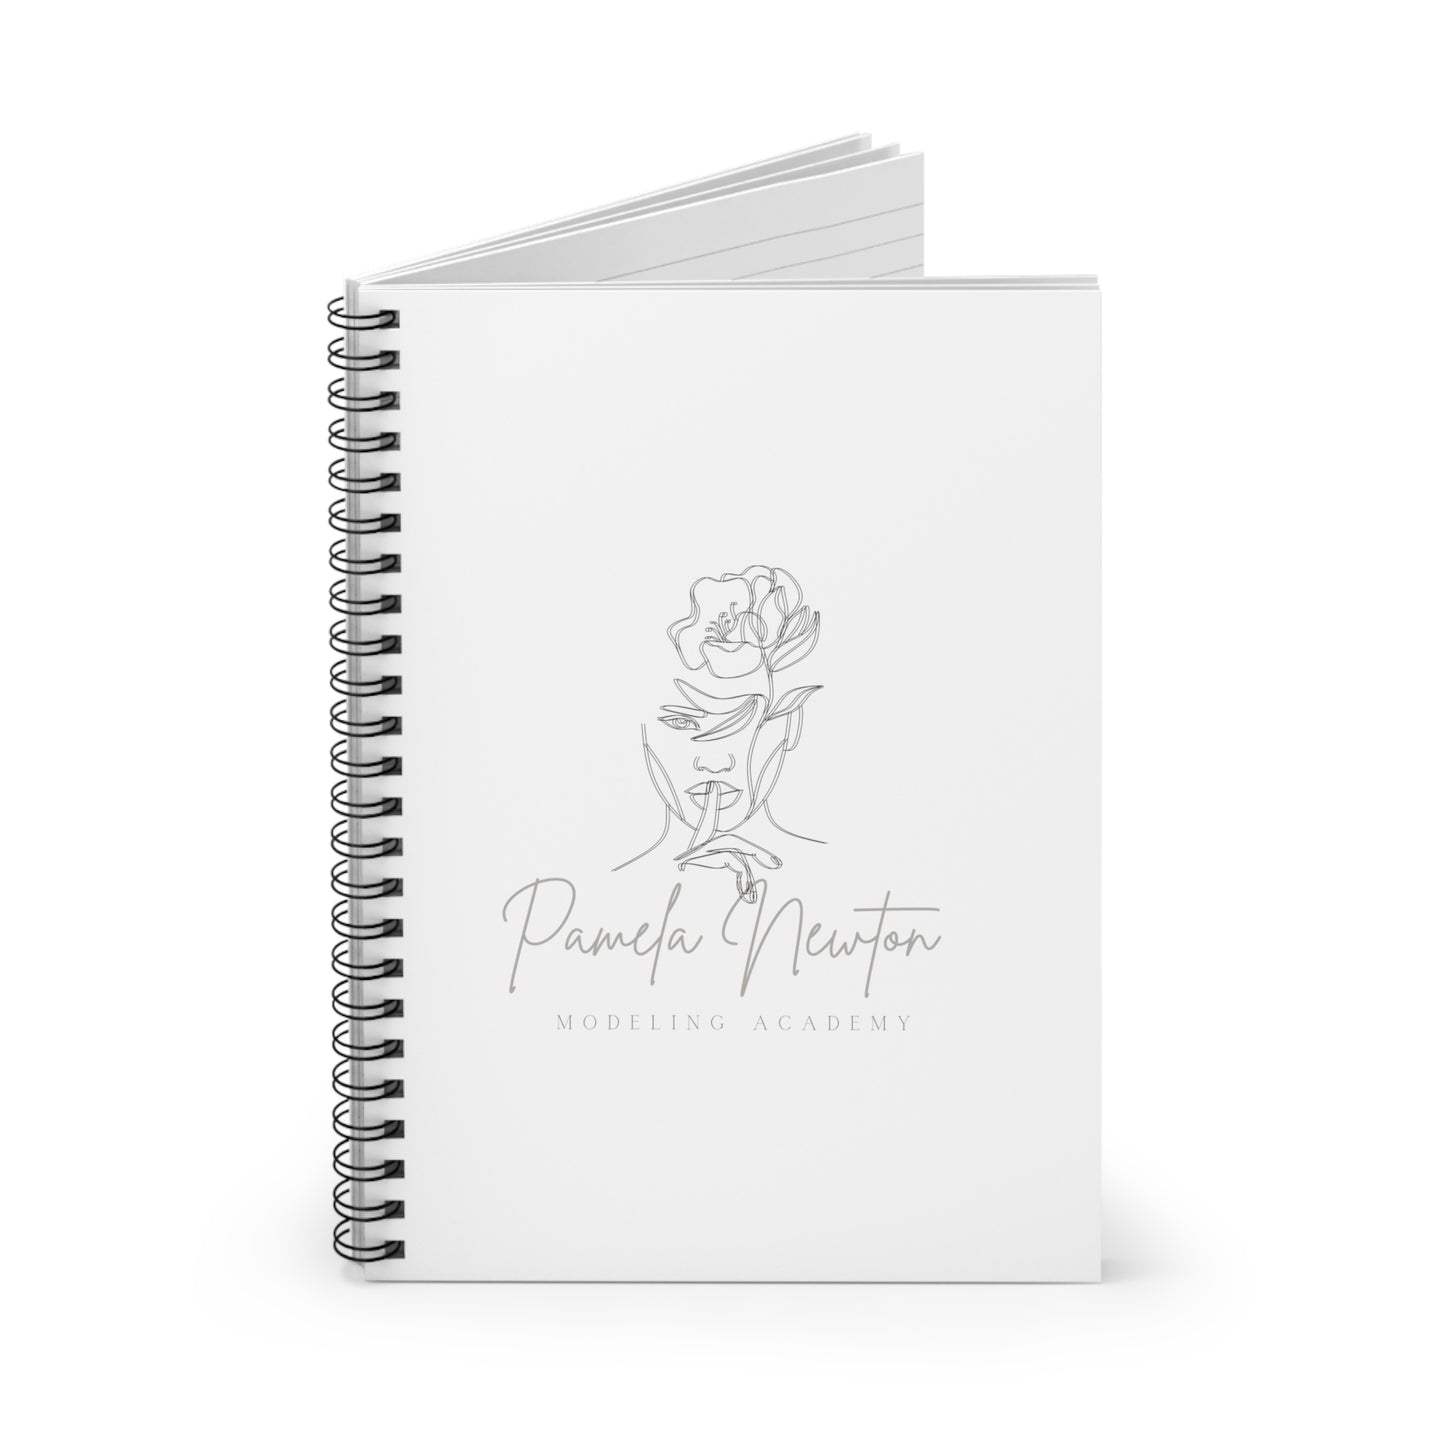 Pamela Newton Modeling Academy Spiral Notebook - Ruled Line